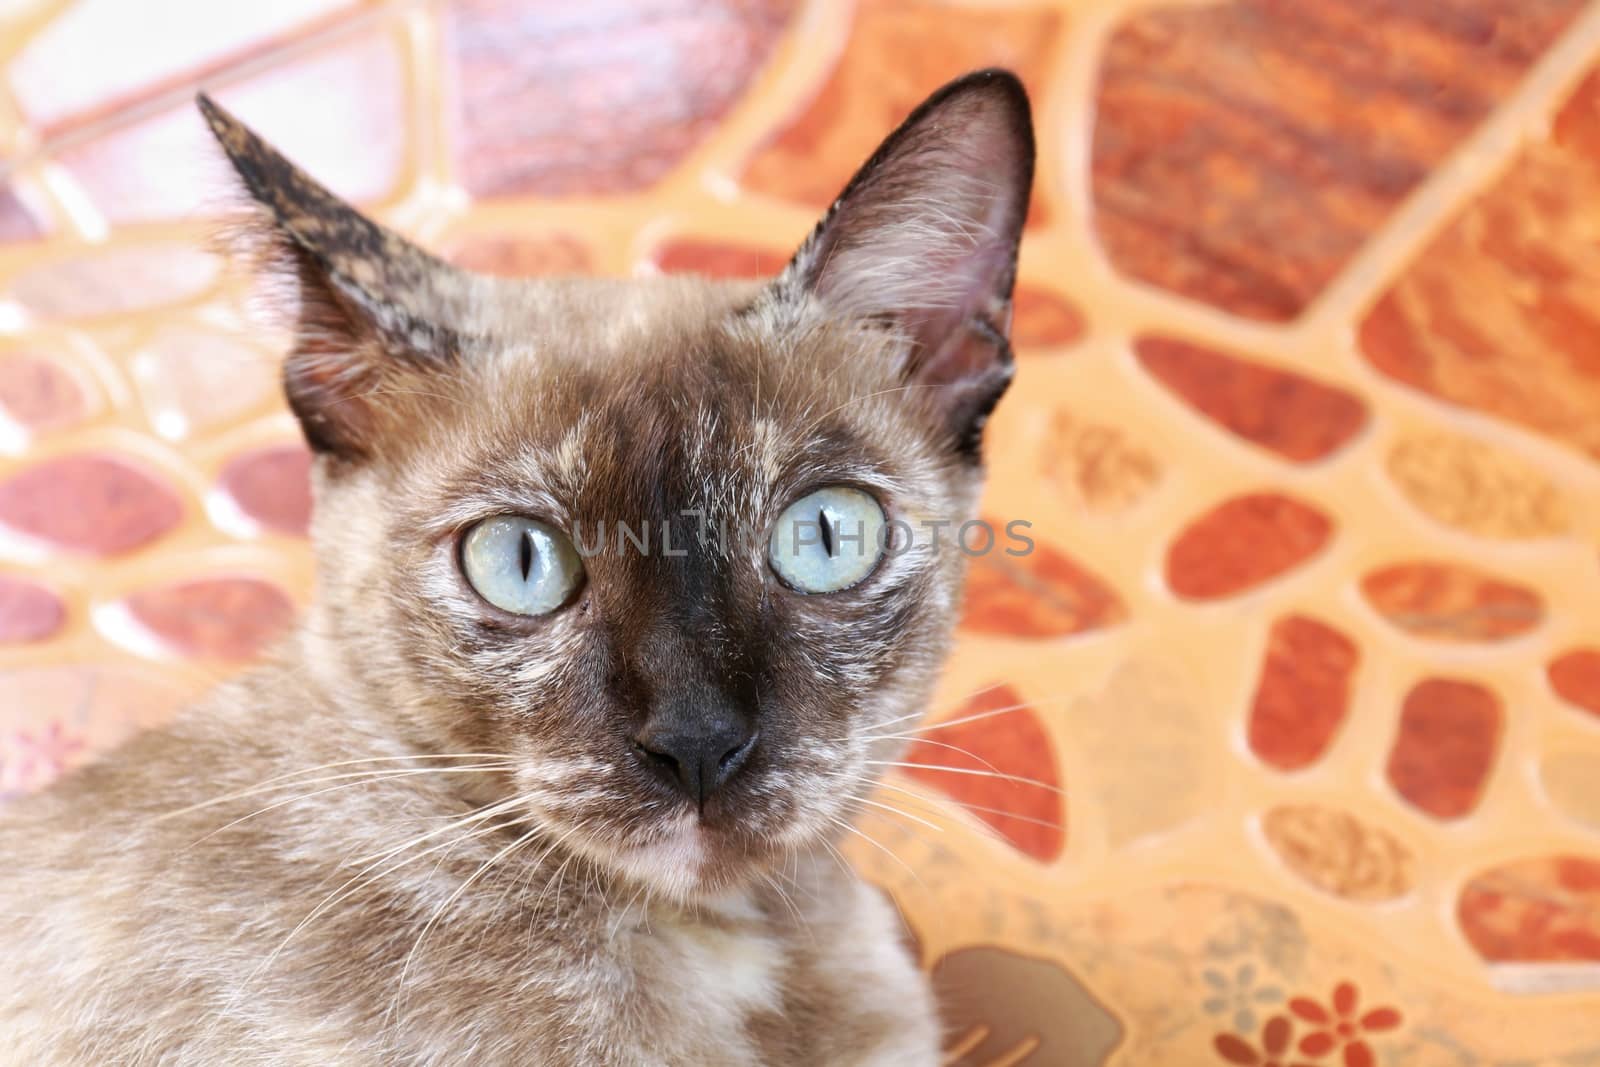 Cat, Portrait of cat face, Asia a cat face, Big eyes cat close-up, Beauty cat cute by cgdeaw